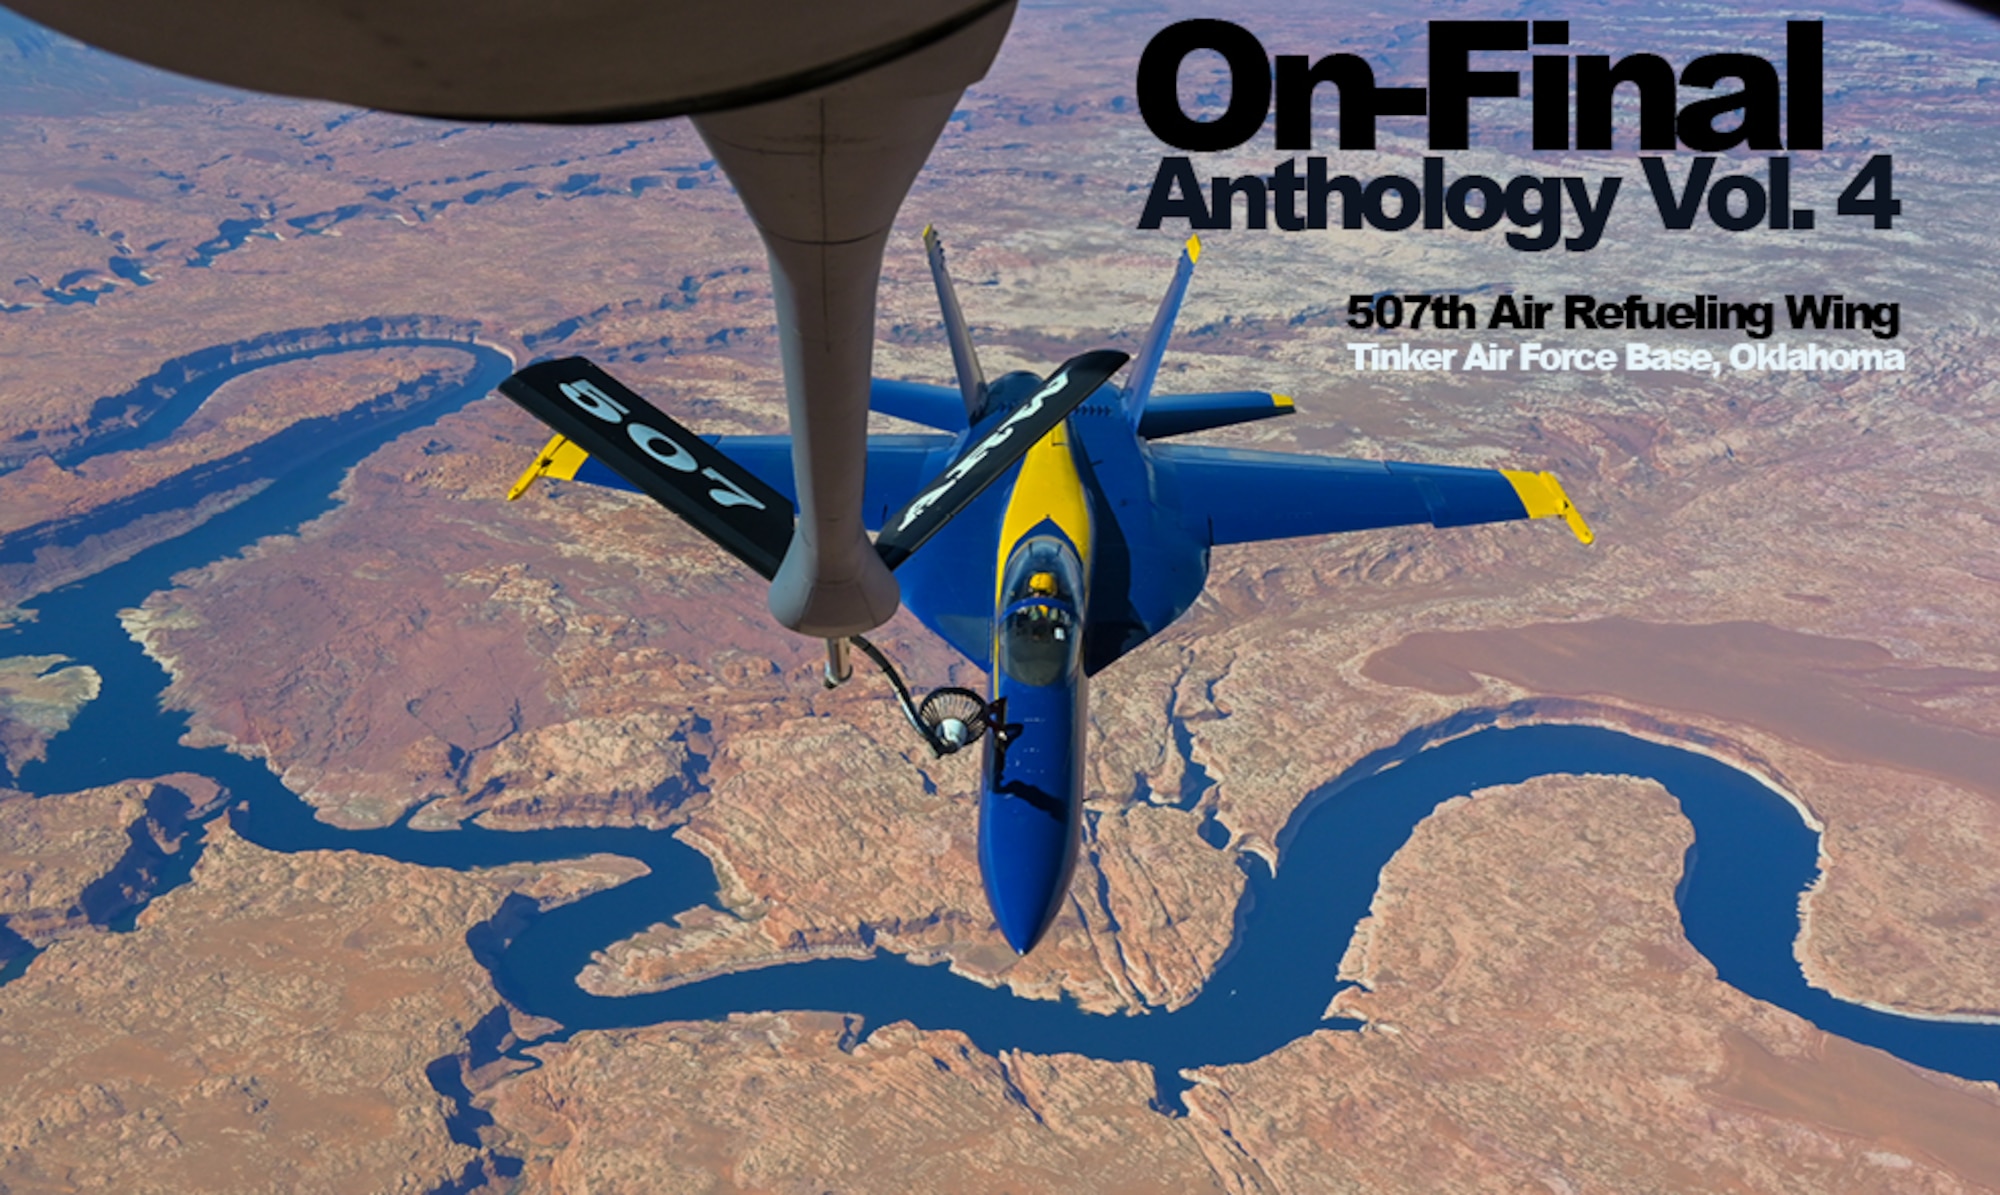 On-Final Anthology Vol. 4